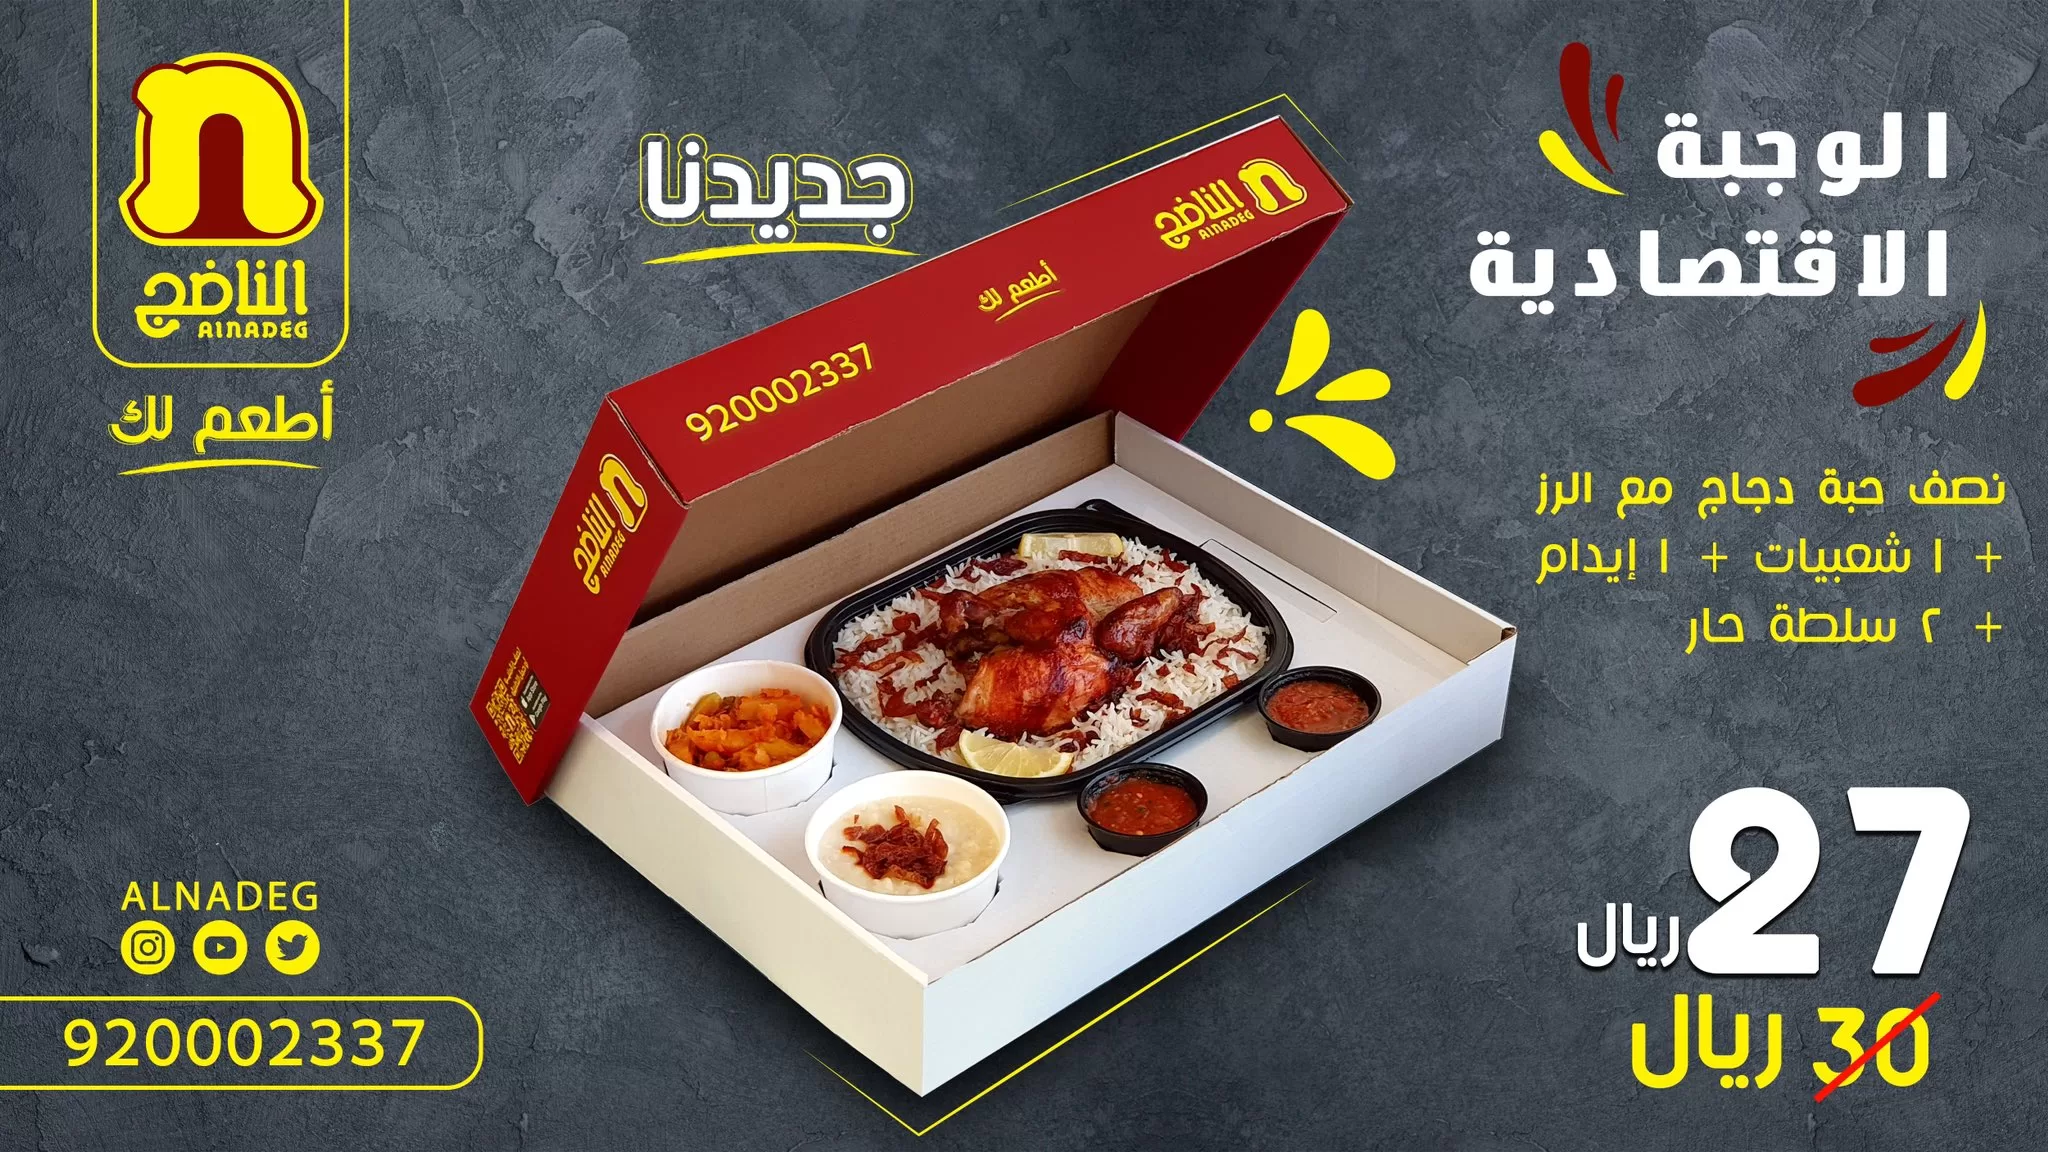 FxXfcopWYAA49n jpg - عروض المطاعم في السعودية اليوم | اشهي الأصناف بأقل الاسعار